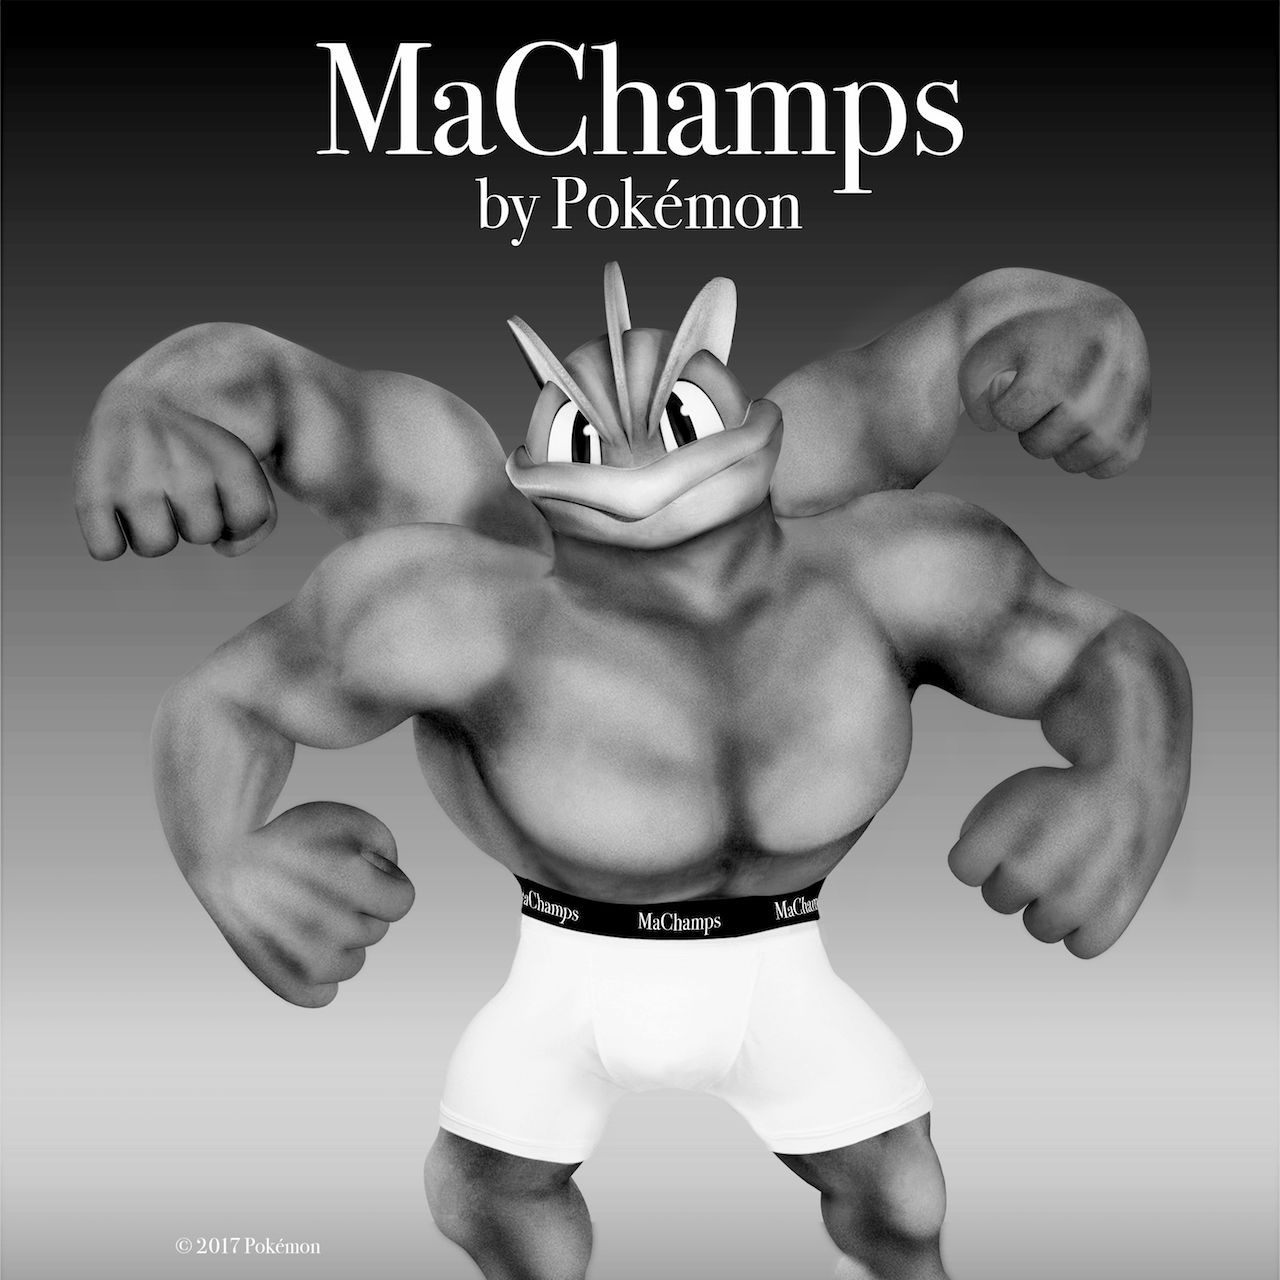 machamps-by-pokemon-image-2